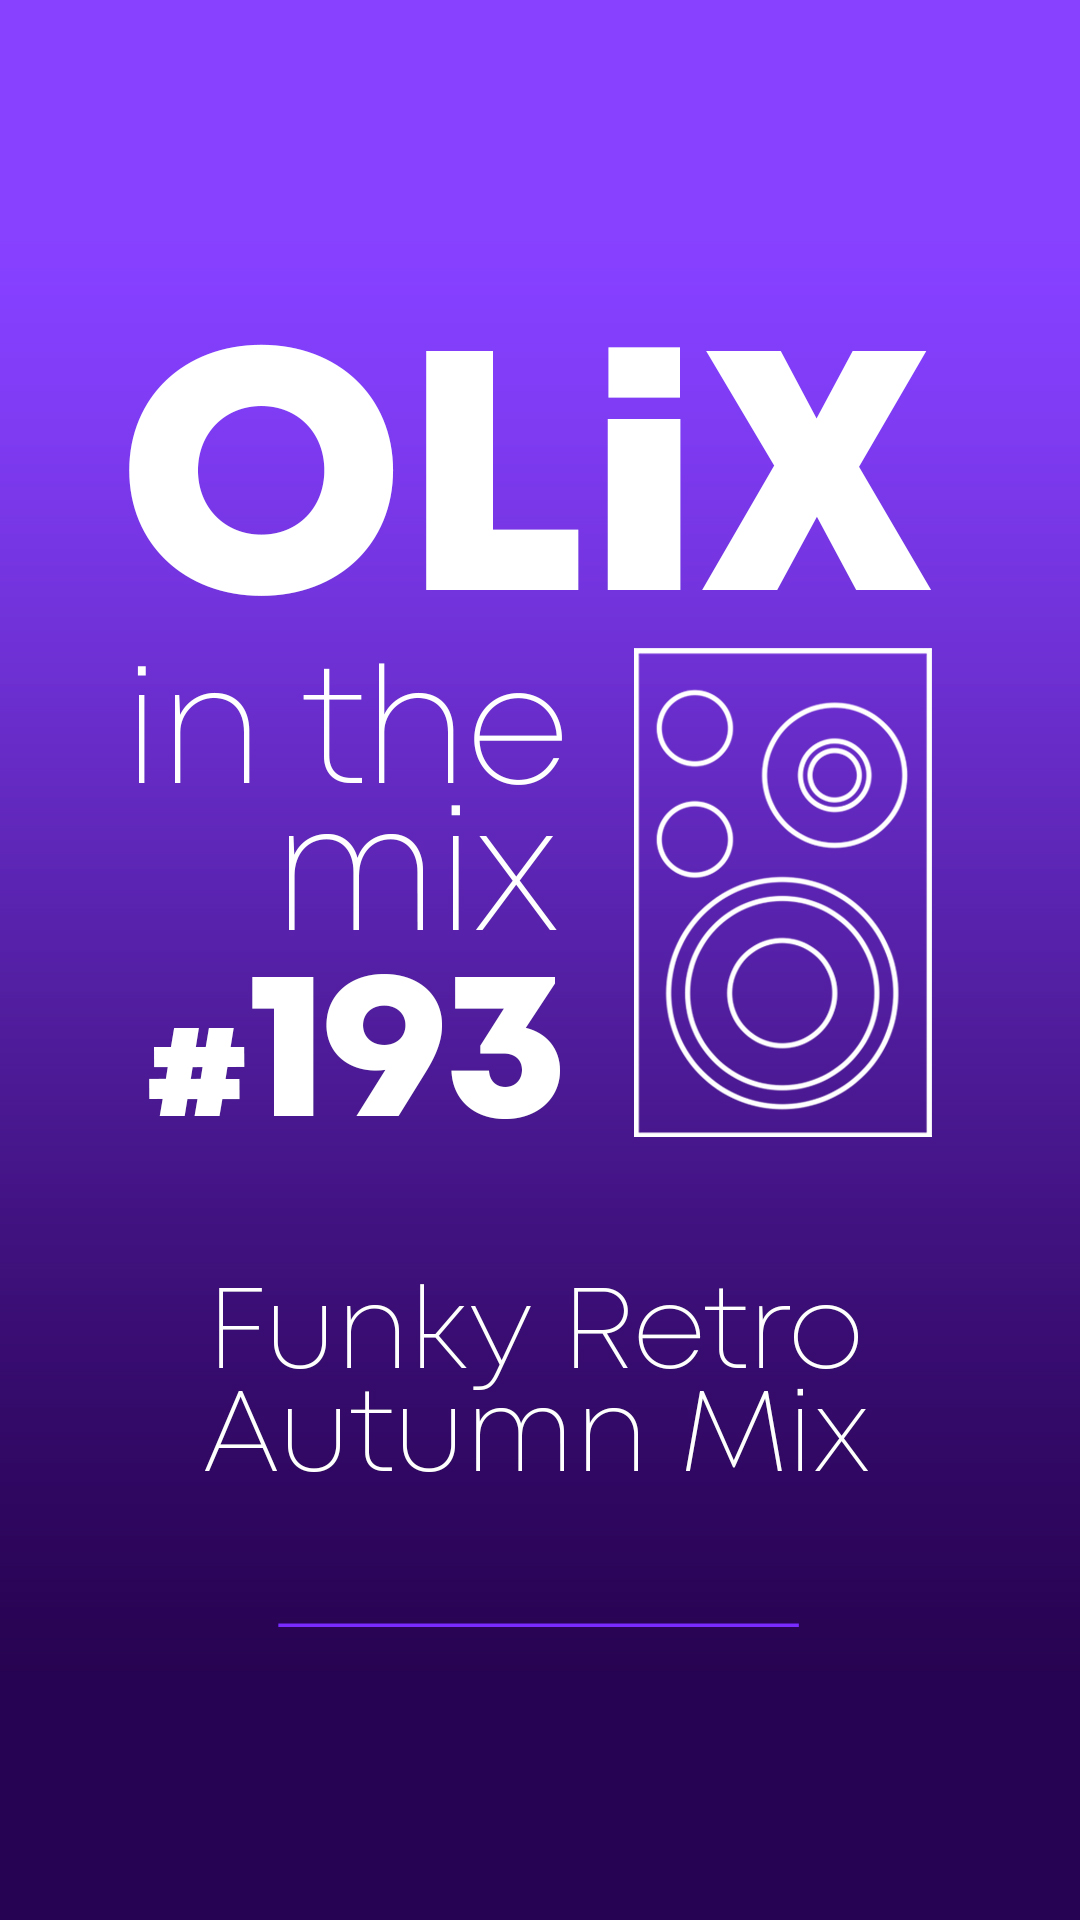 OLiX in the Mix - 193 - Funky Retro Autumn Mix